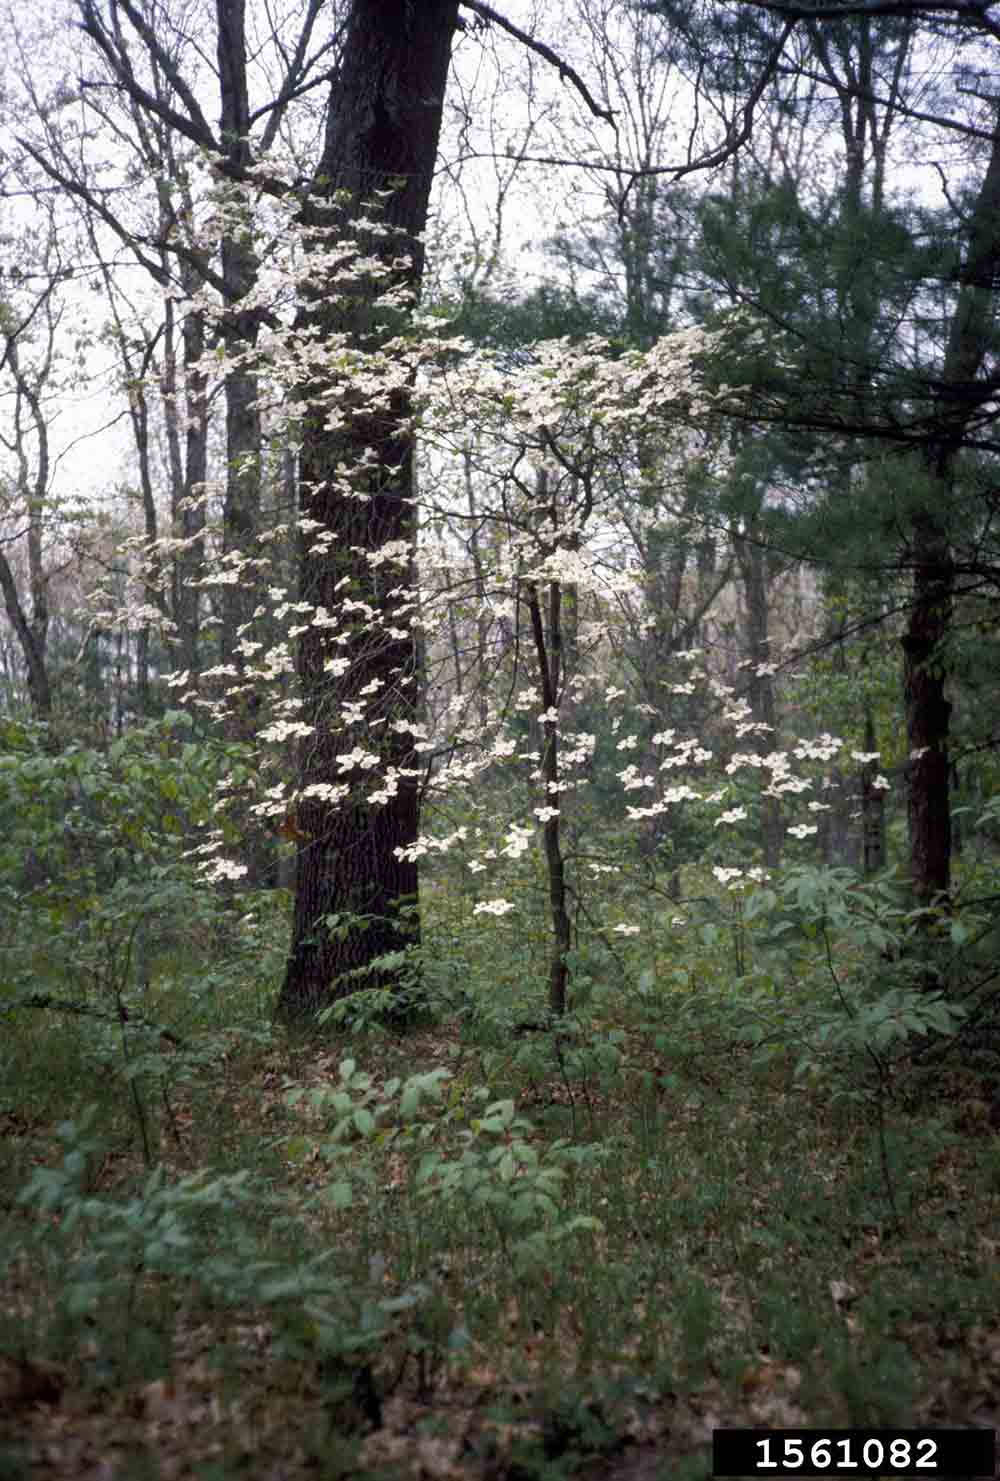 Flowering dogwood tree in bloom in the woods